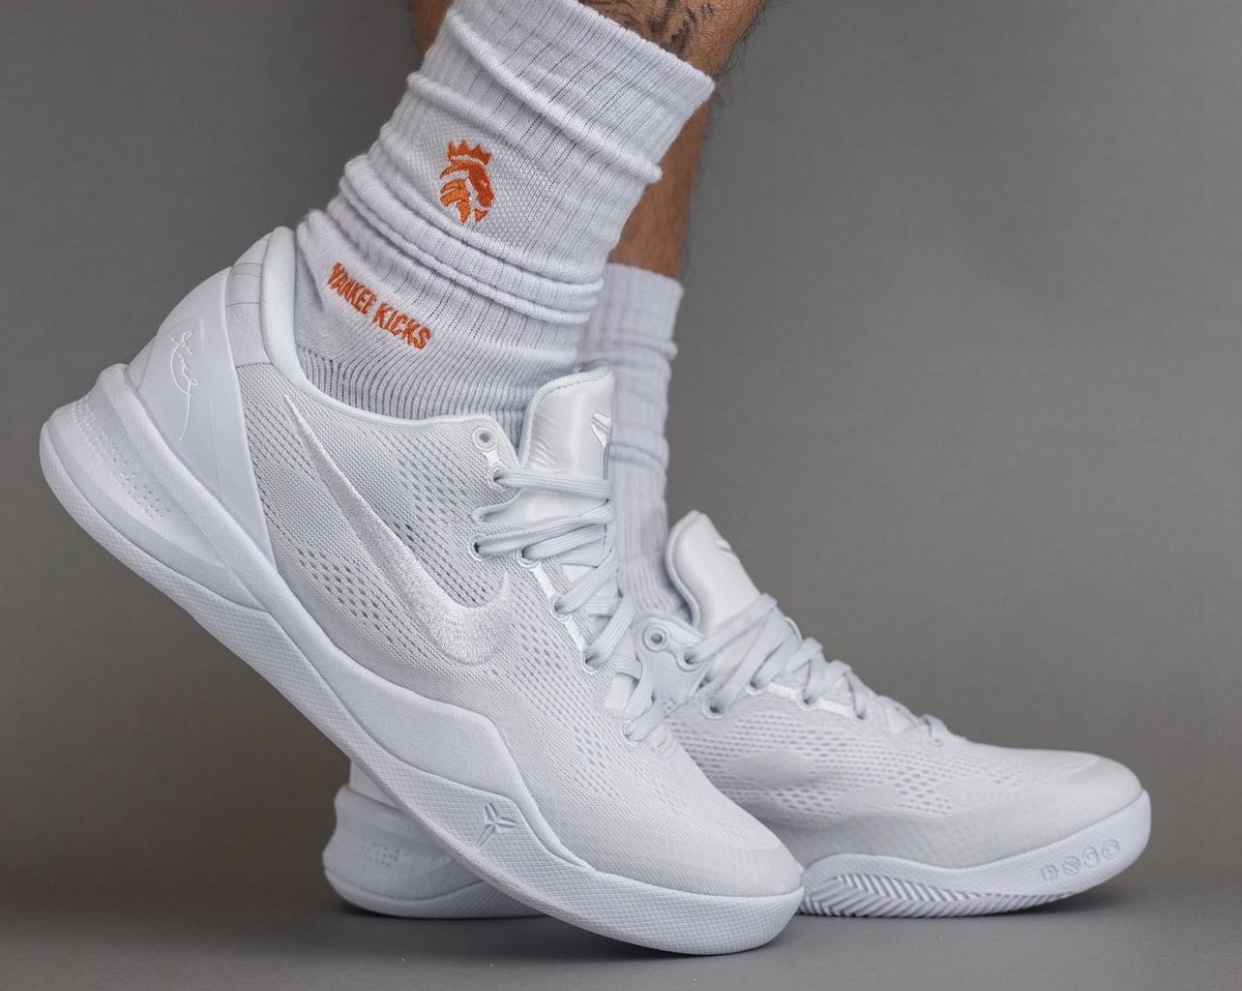 New Nike Kobe Basketball Shoe Unveiled August 10th